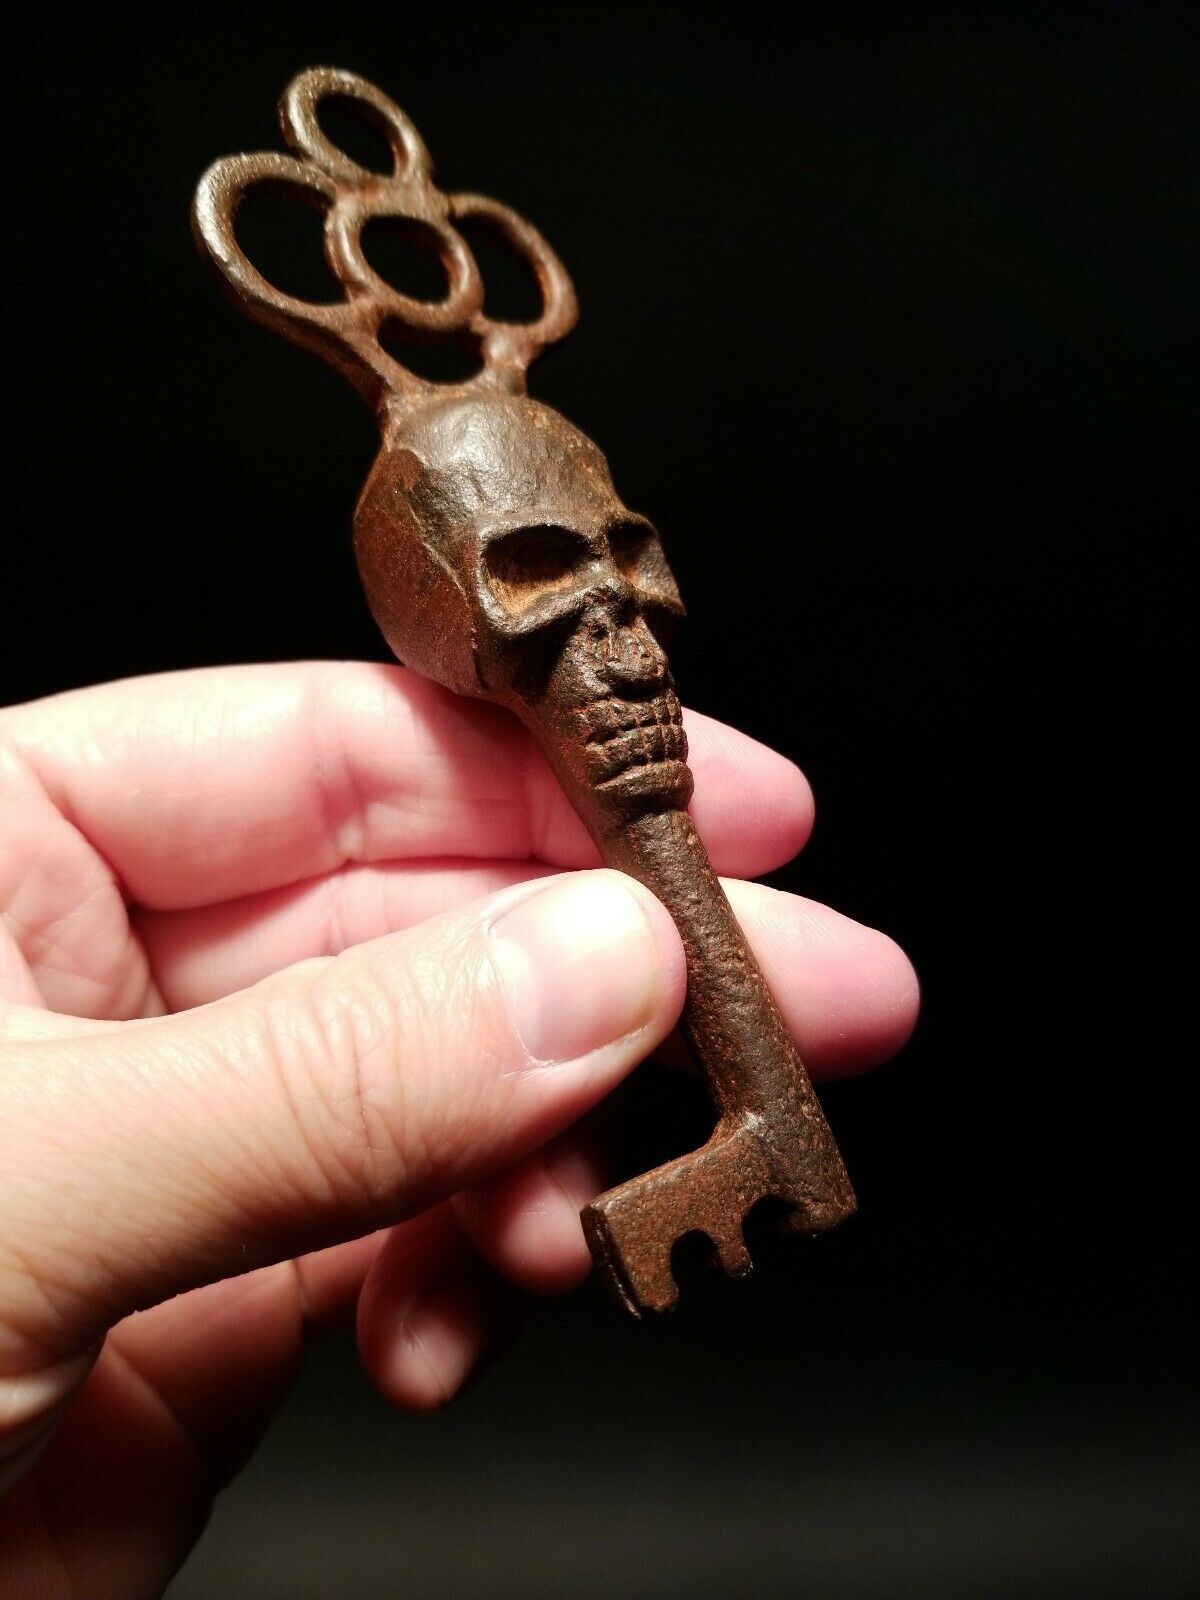 Cast Iron Lock And Key Set Large Antique Vintage Look Finish Prop Skeleton  Key